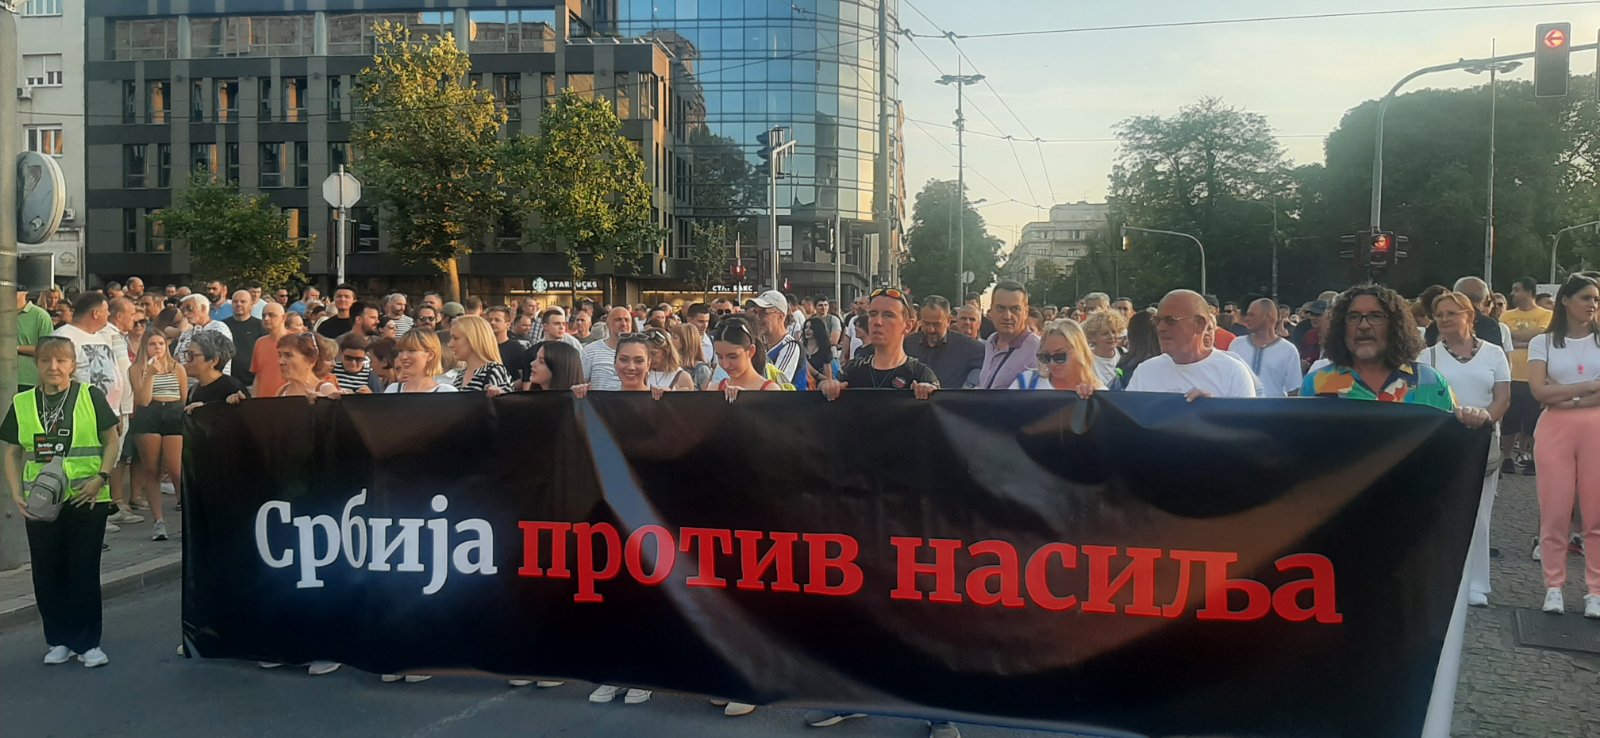 Završen protest Srbija protiv nasilja: Performans, džingl sa Vučićem i Gašićem i 5.000 građana ispred PU Beograd (FOTO, VIDEO) 4